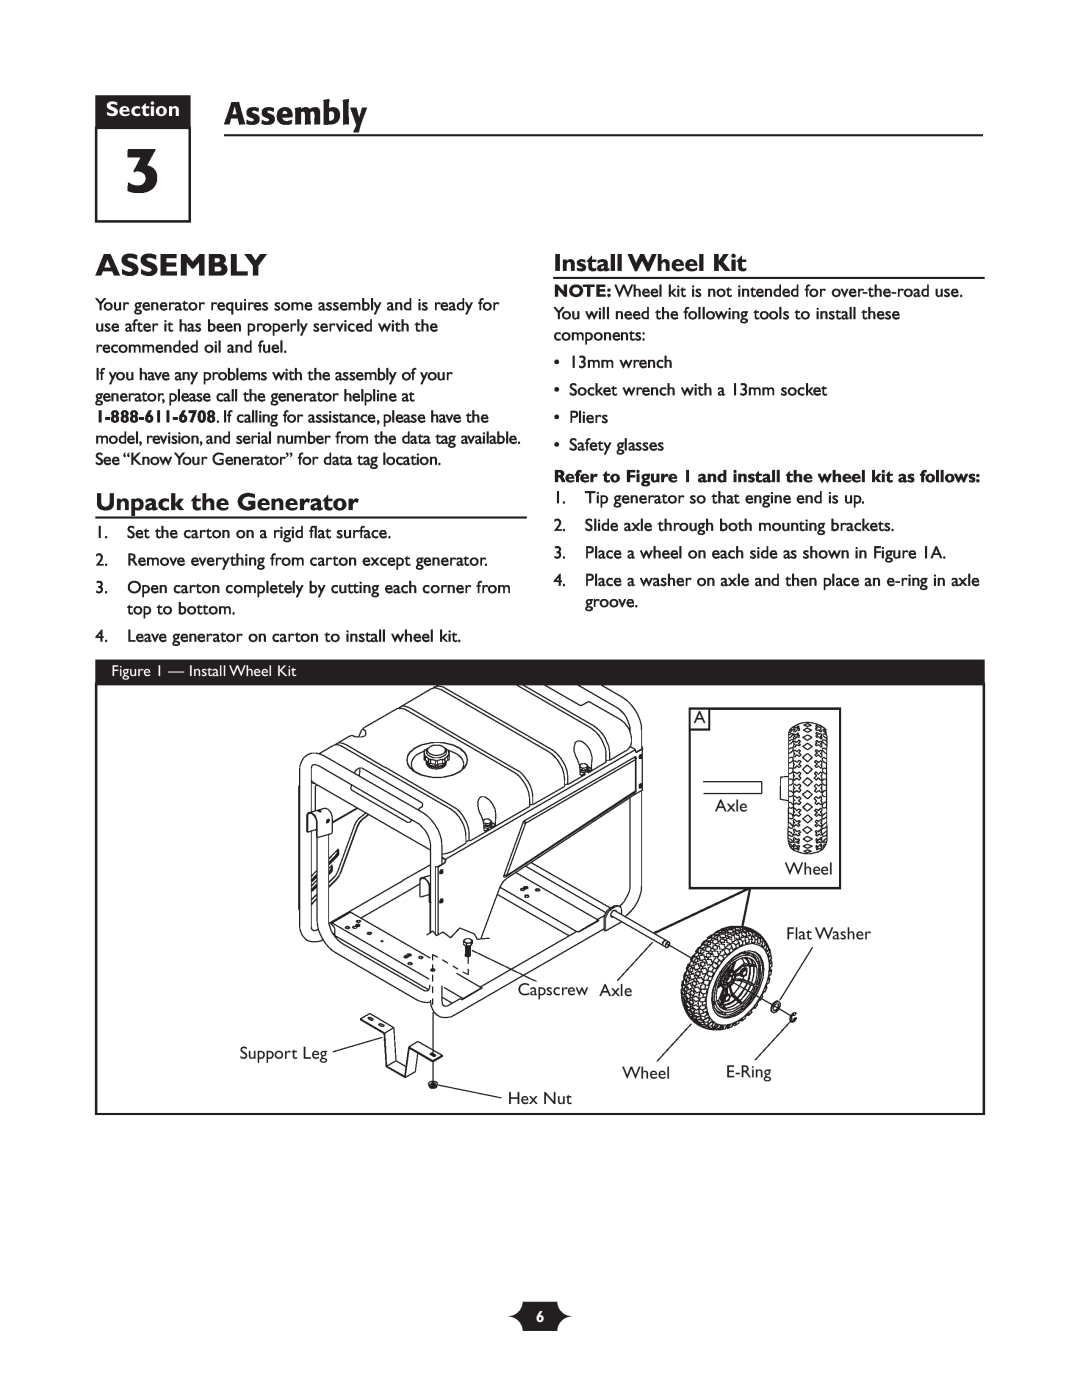 Troy-Bilt 030245 manual Install Wheel Kit, Unpack the Generator, Section Assembly 